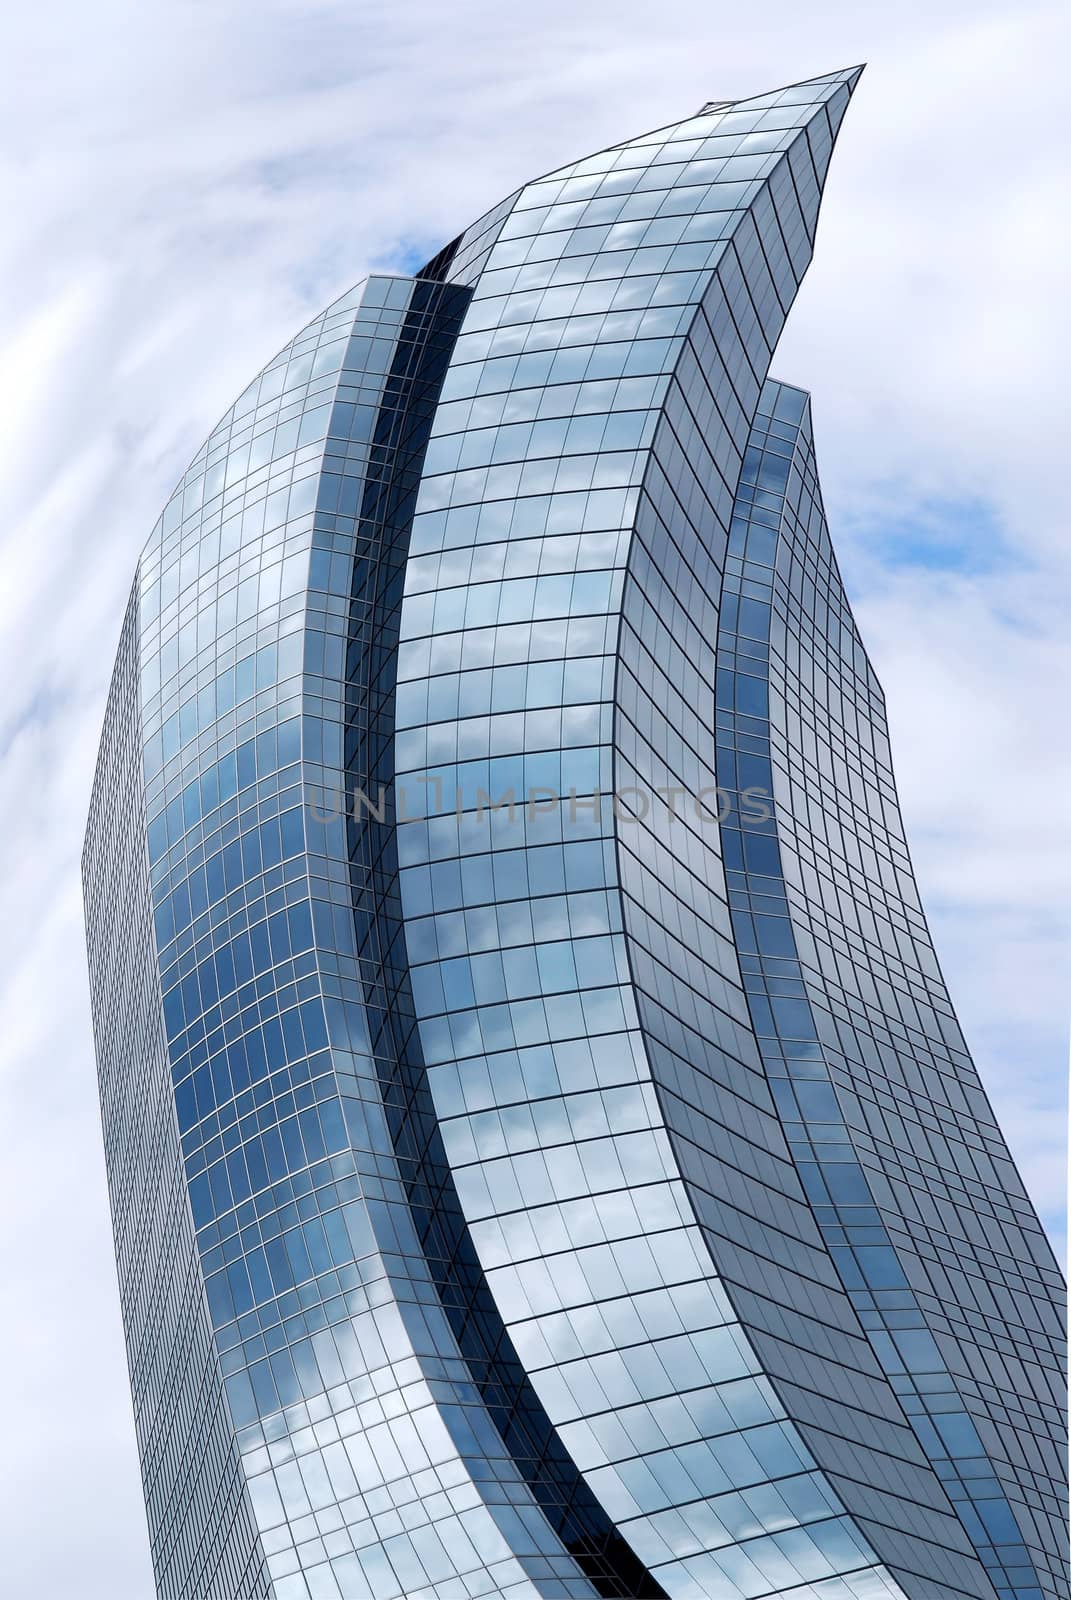 Distorted skyscraper by elenathewise